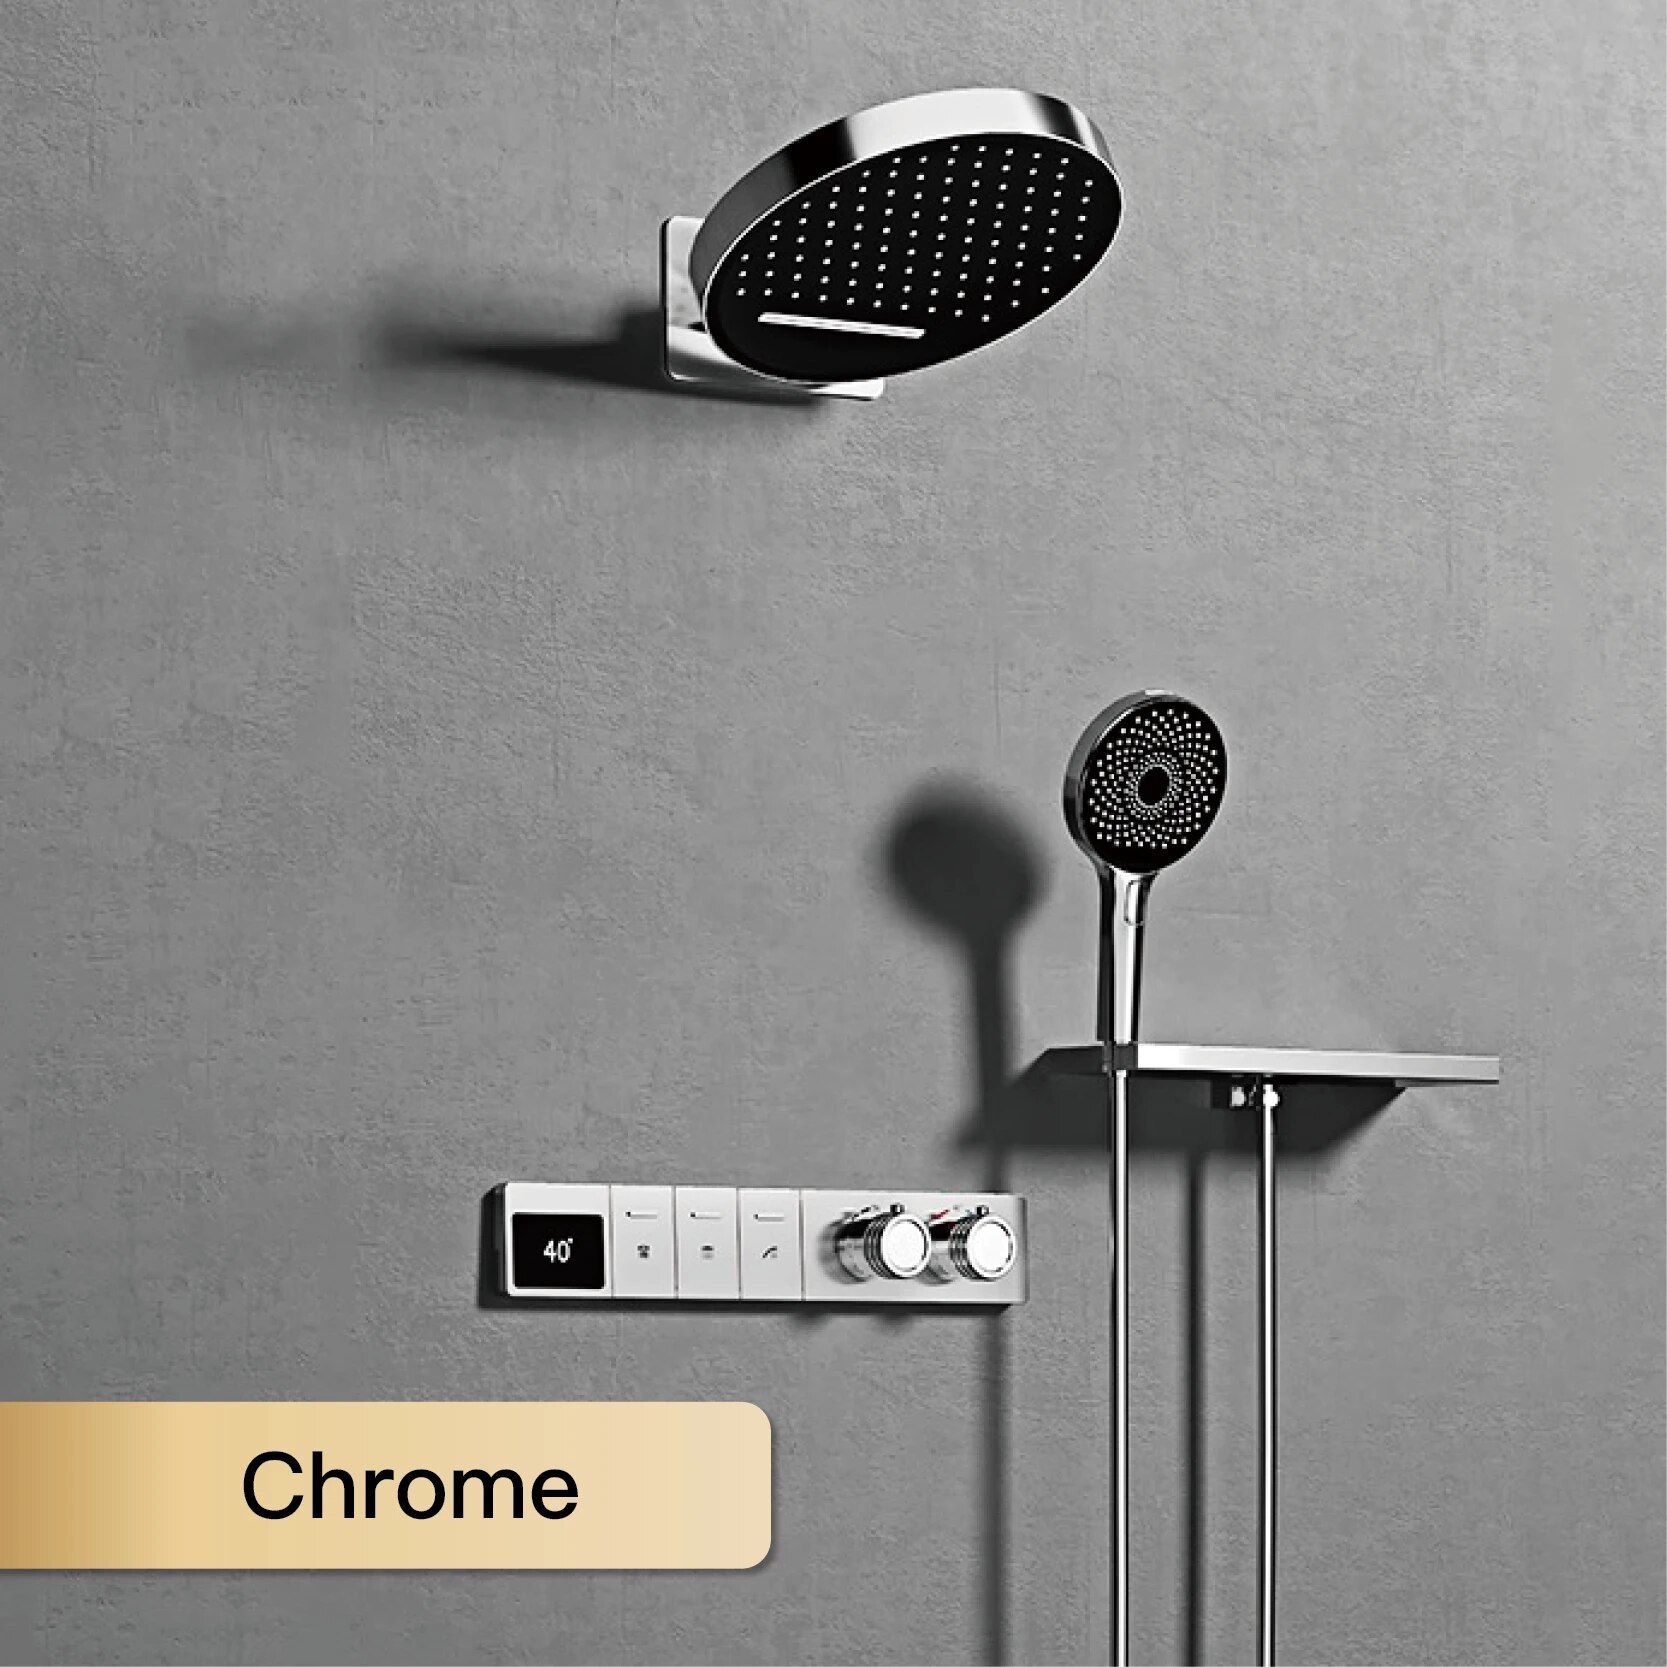 Chrome (with a shelf)